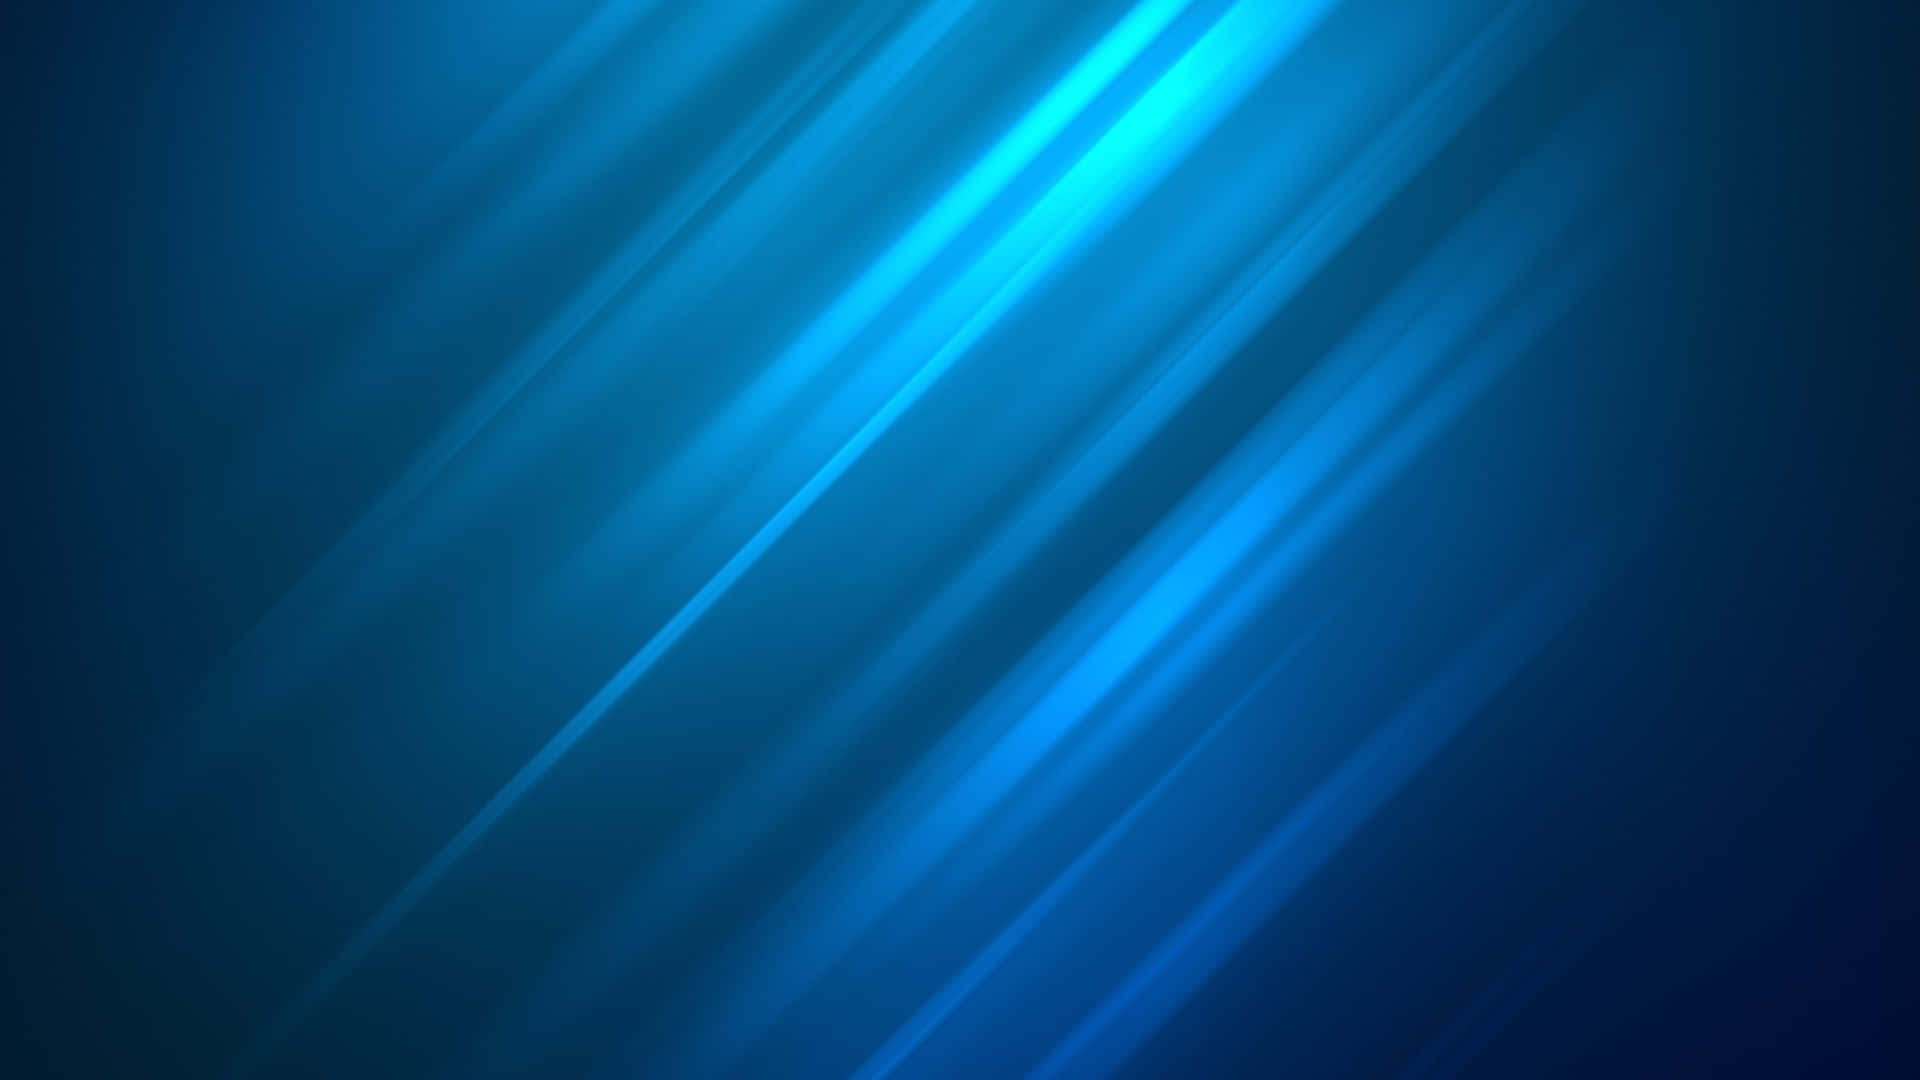 blue light lines on a dark background